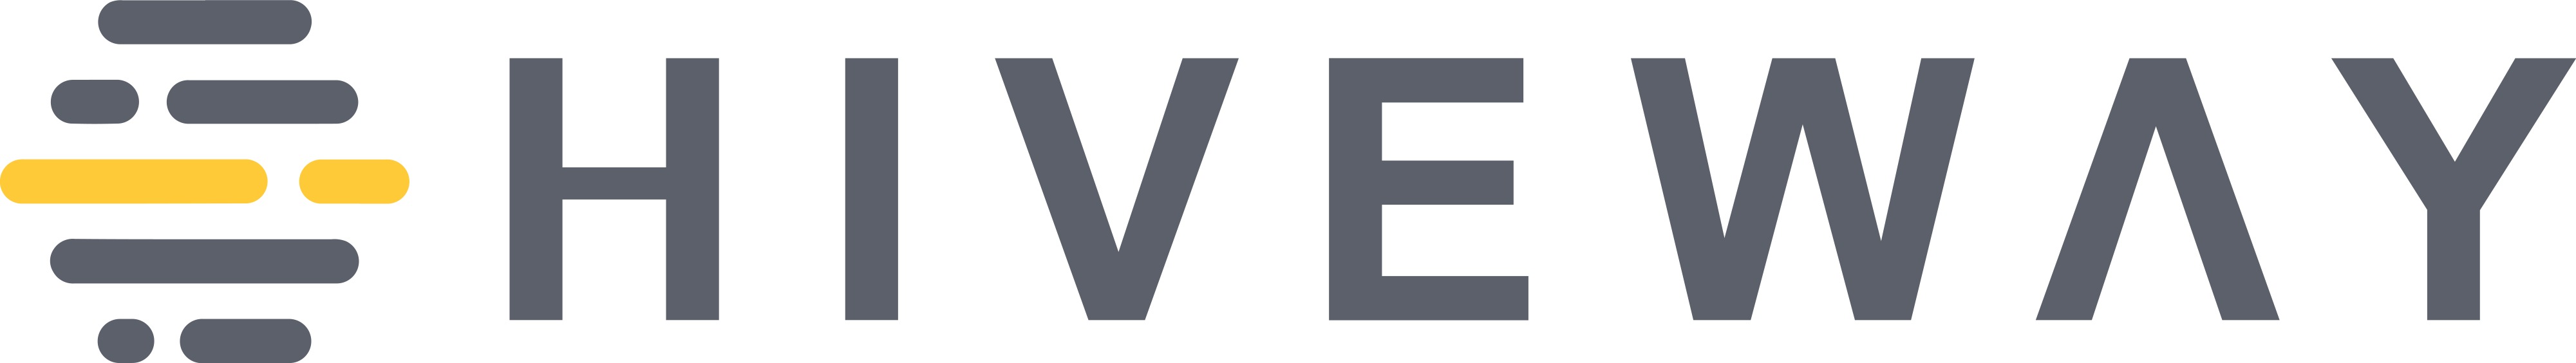 Hiveway name and logo (1)-1